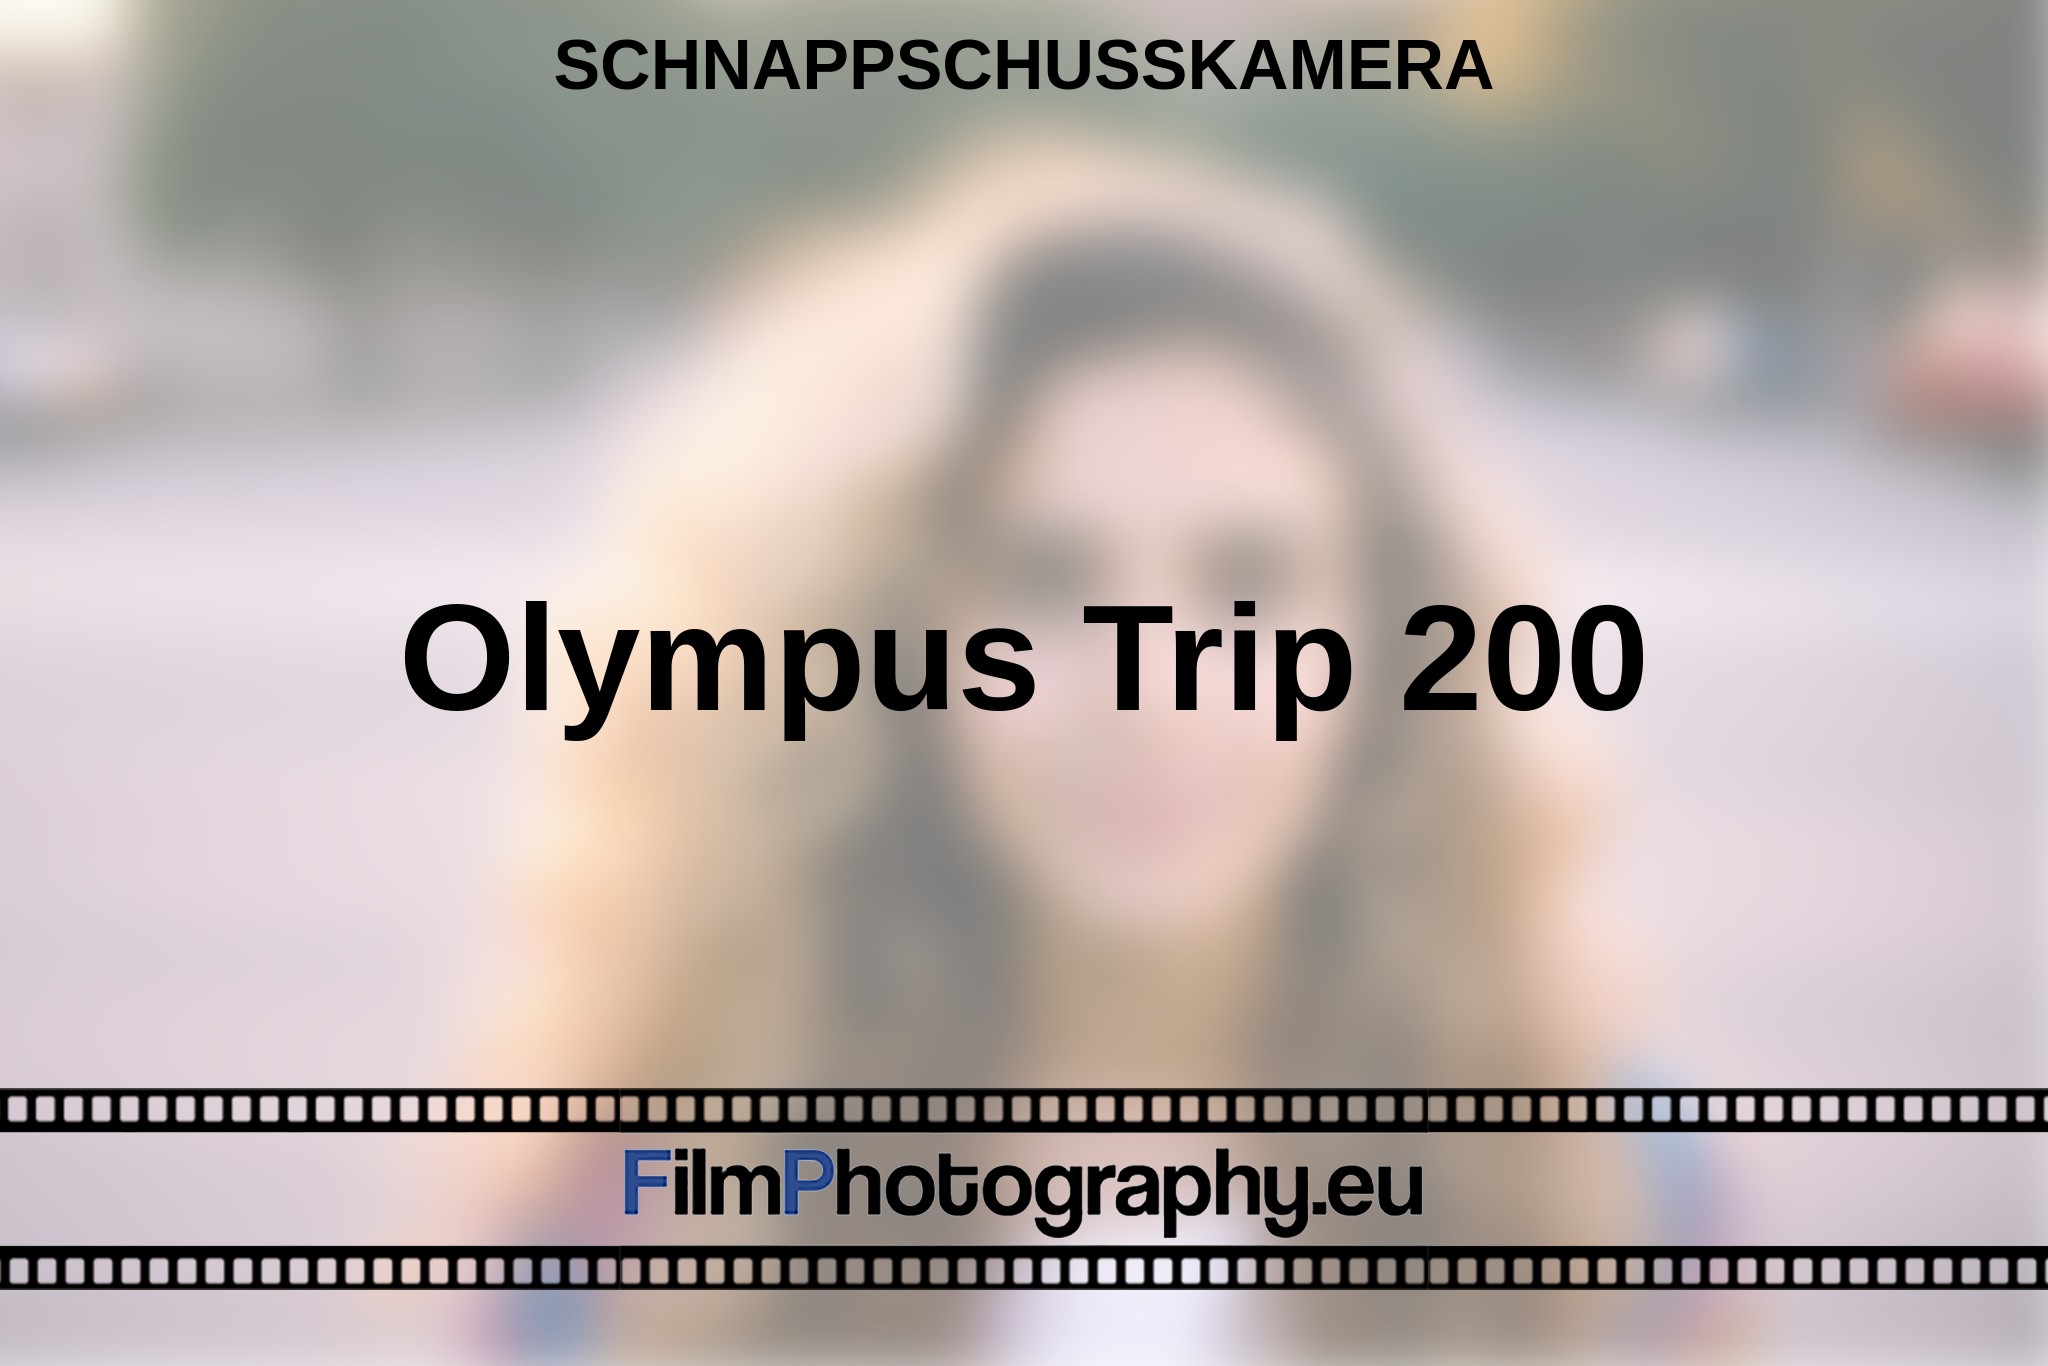 olympus-trip-200-schnappschusskamera-bnv.jpg